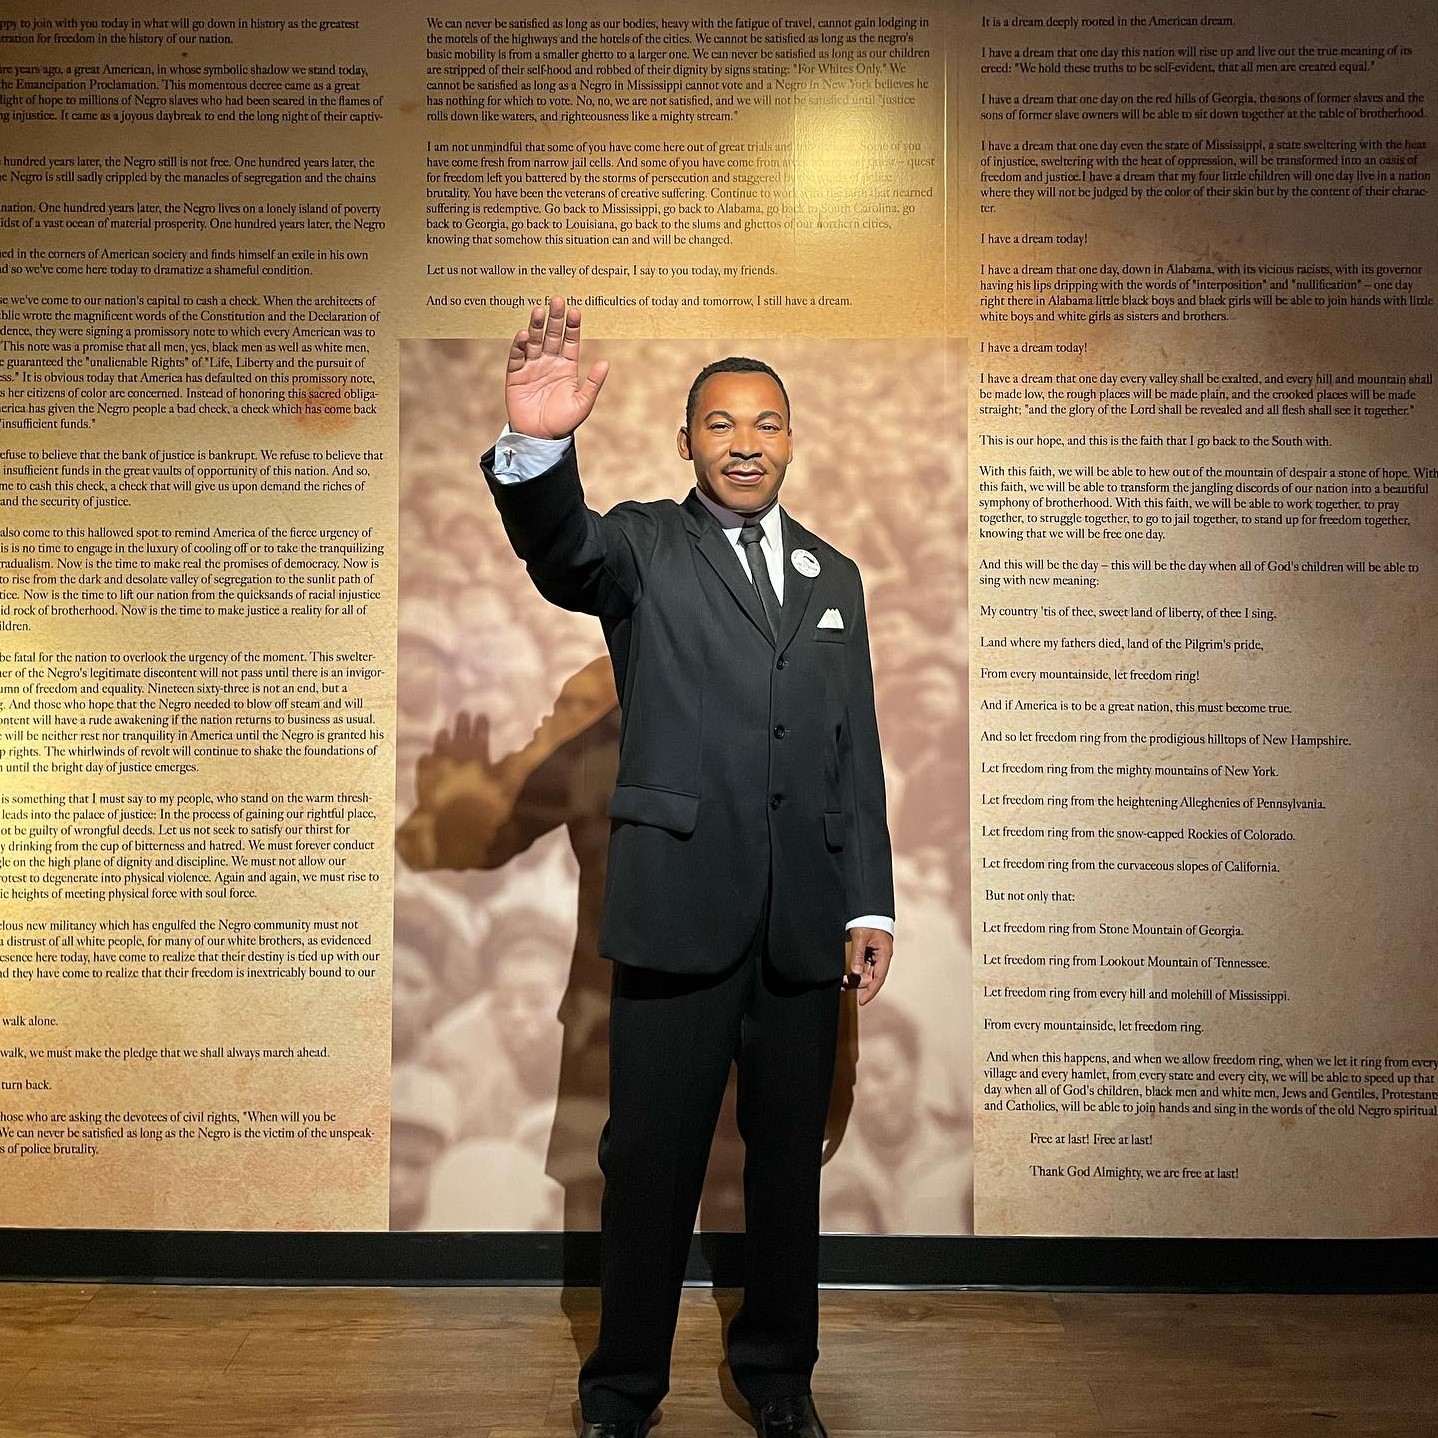 Martin Luther King Jr. Orlando + New York (1)